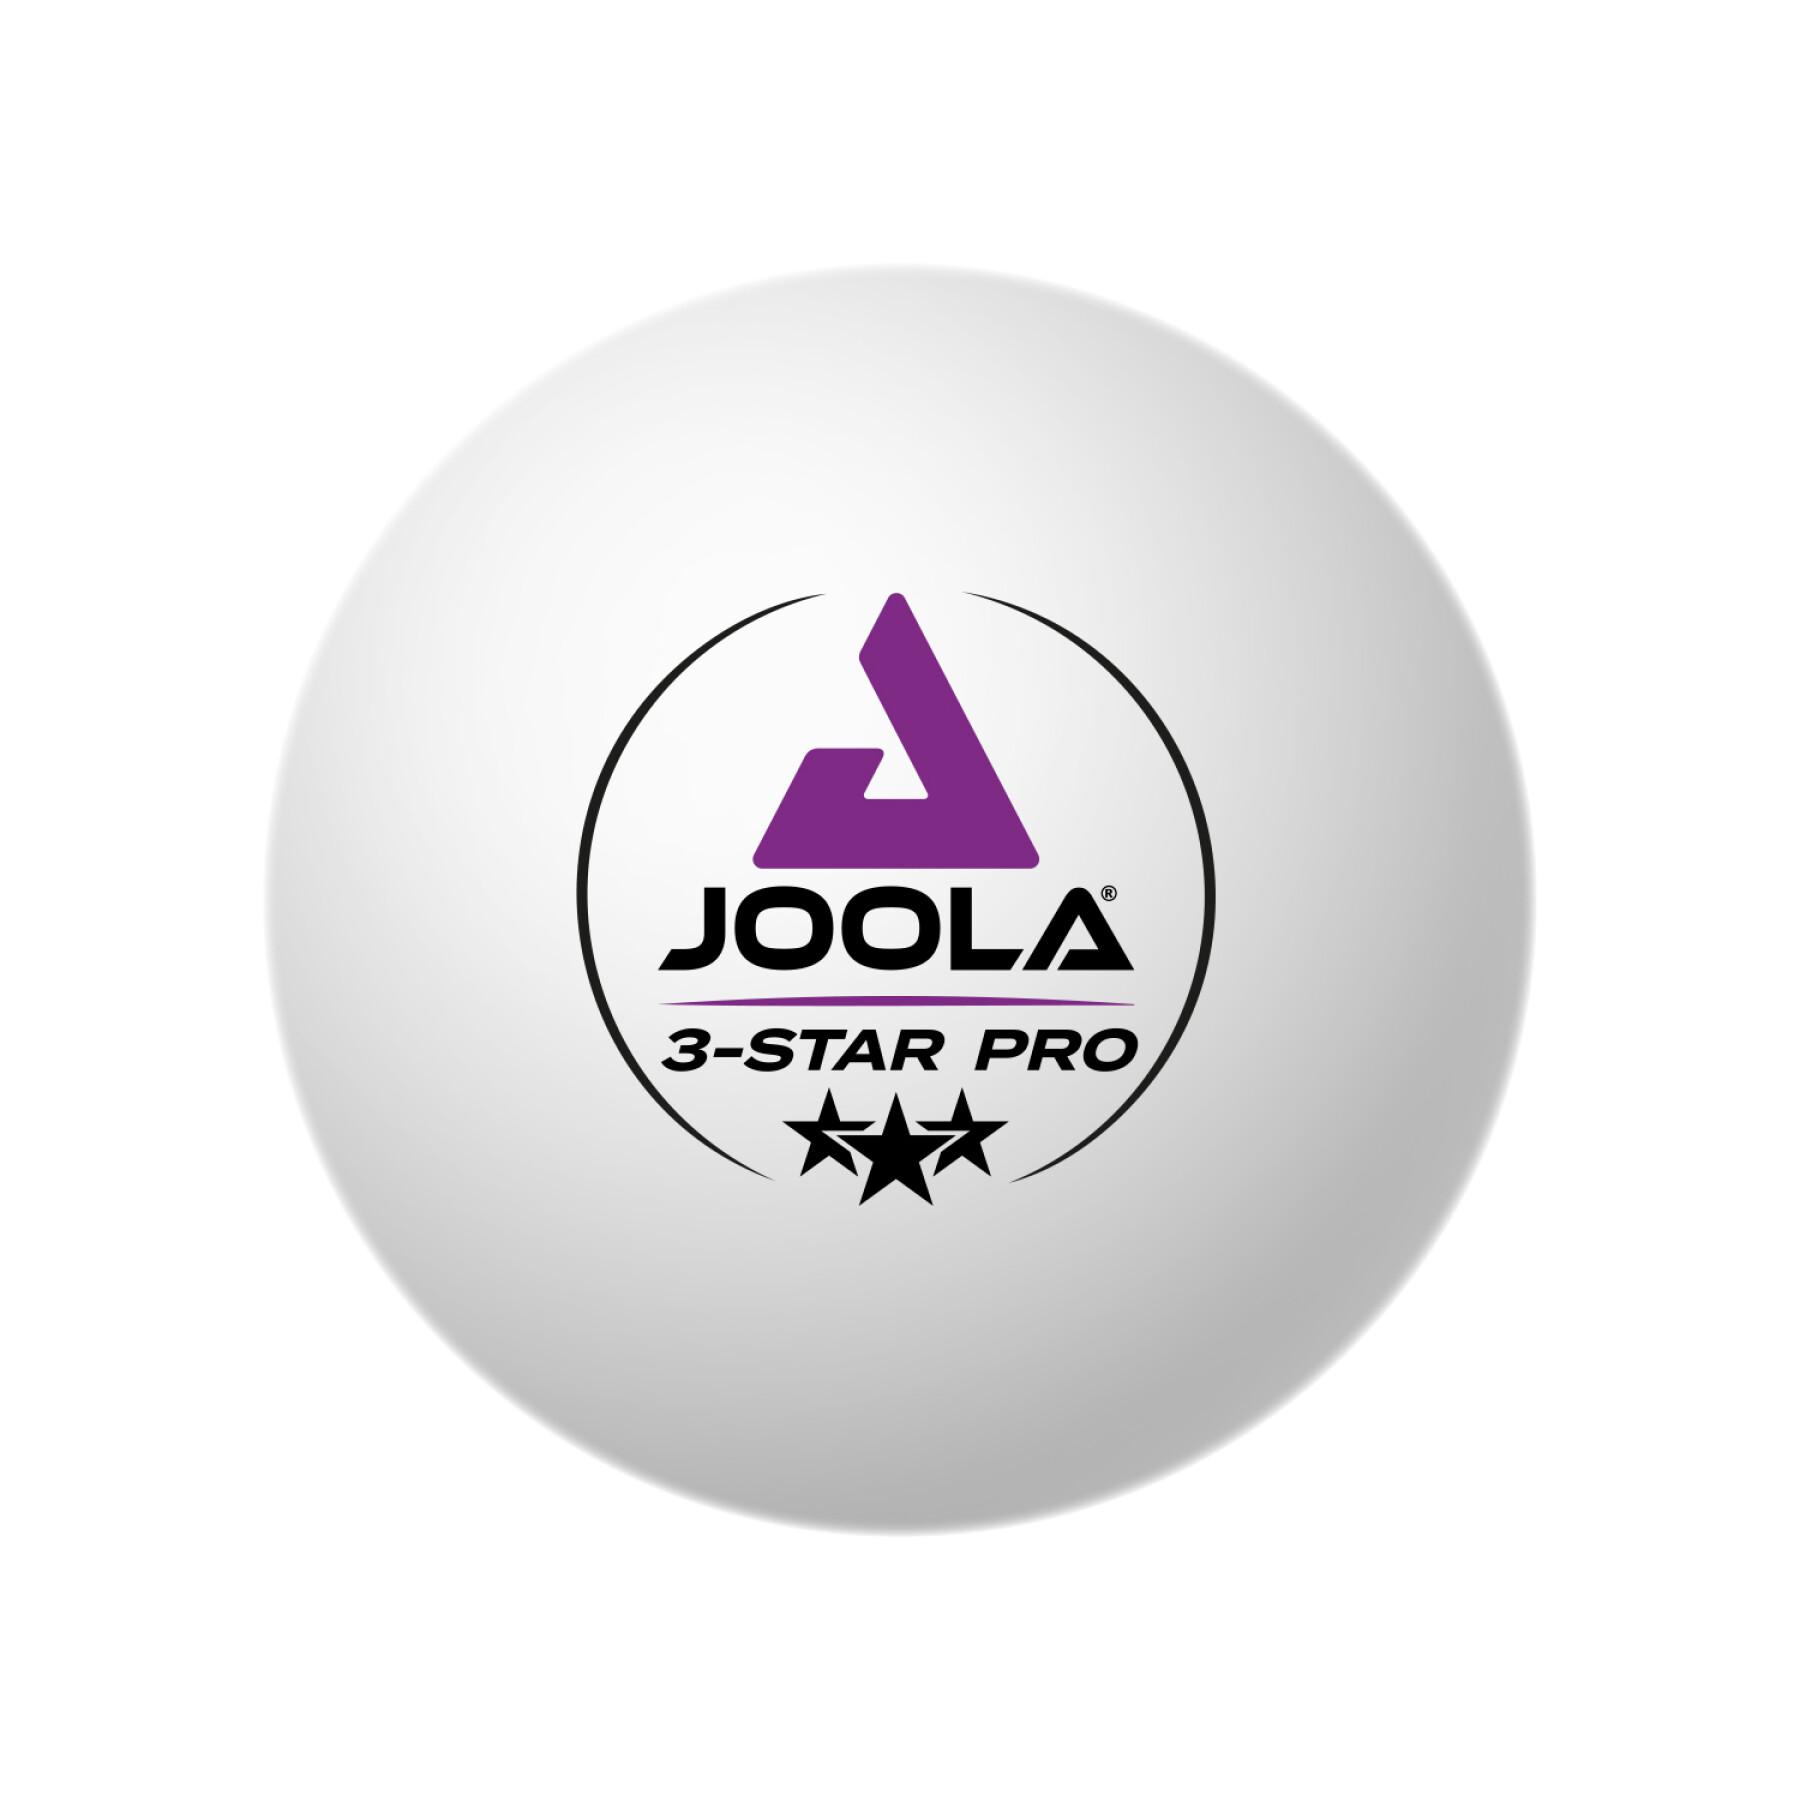 Conjunto de 6 bolas de ténis de mesa Joola 3-Star Pro